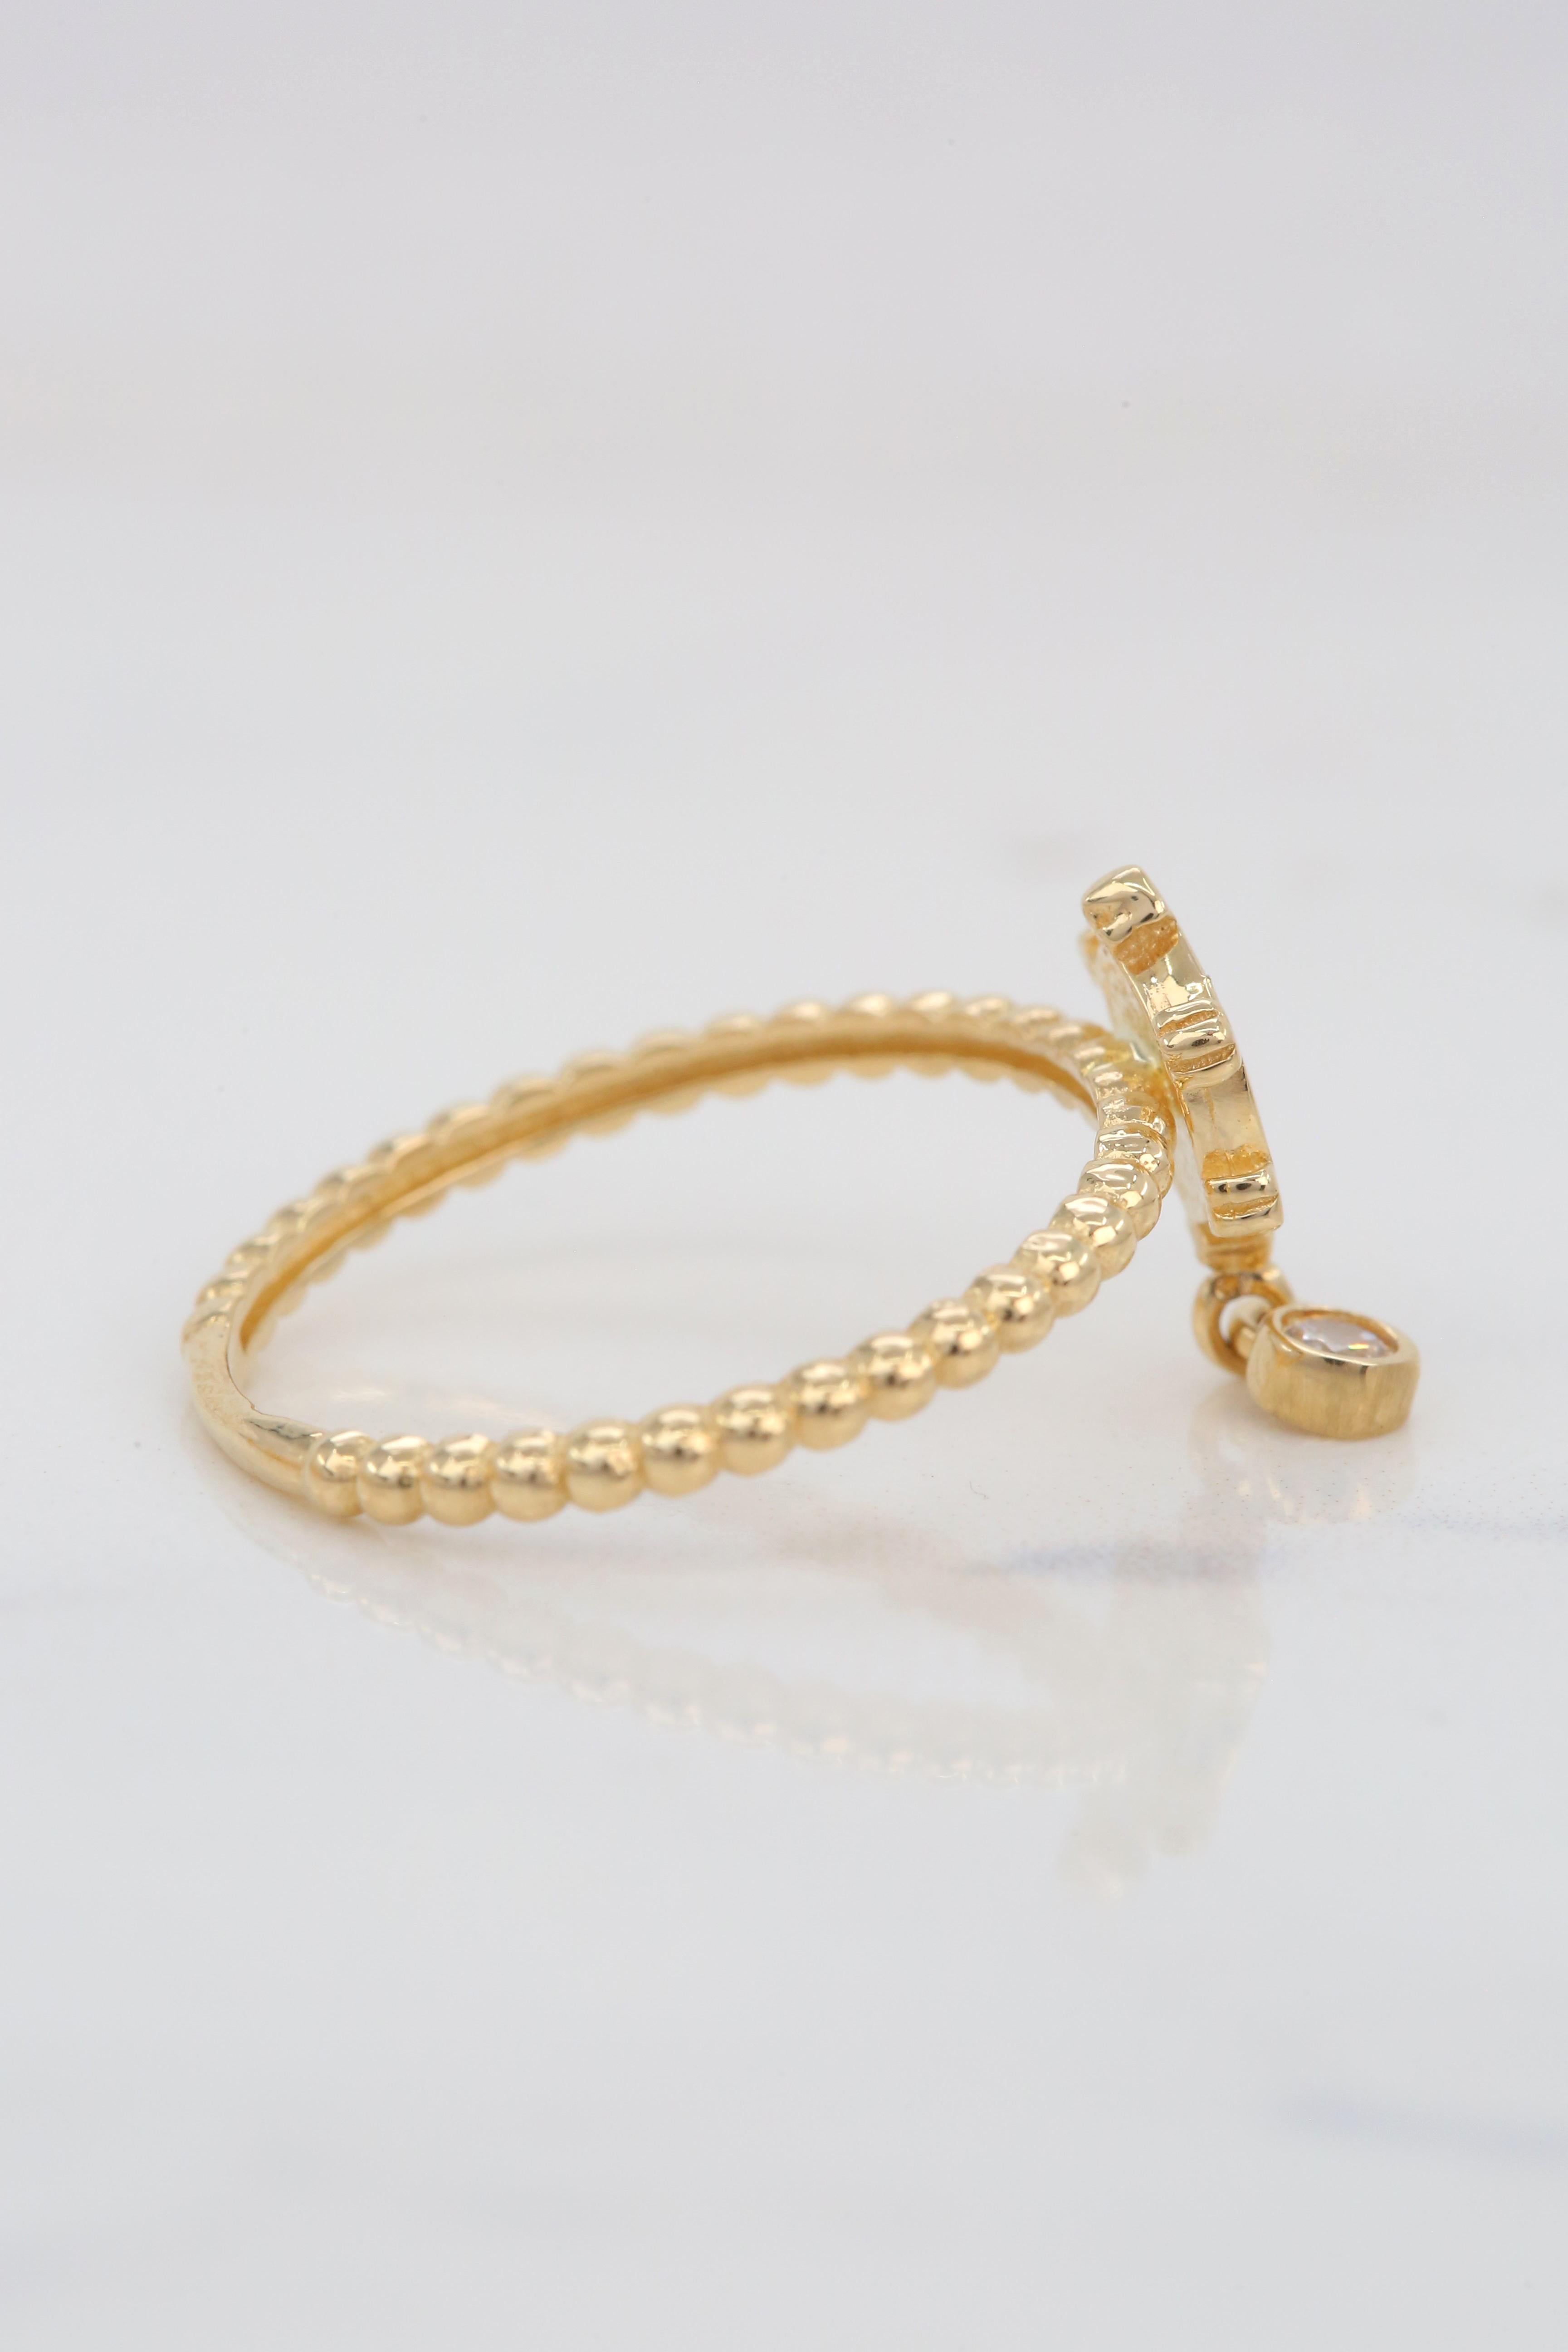 14K Gold Dainty Eye Enameled Rudder Ring with Pendant 6